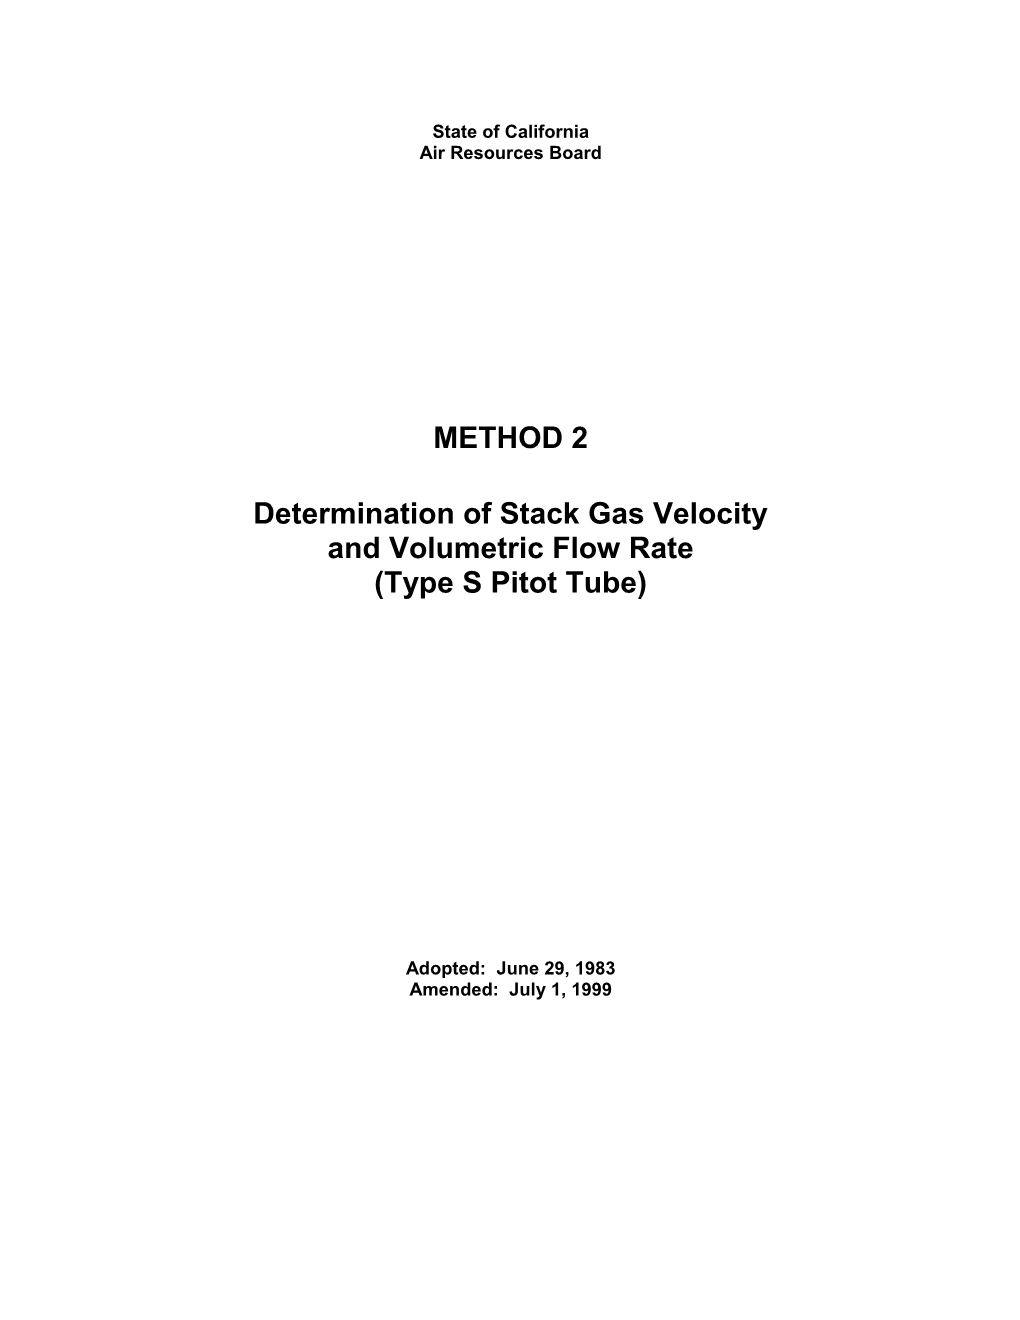 Test Method: Method 2 Determination of Stack Gas Velocity and Volumetric Flow Rate (Type